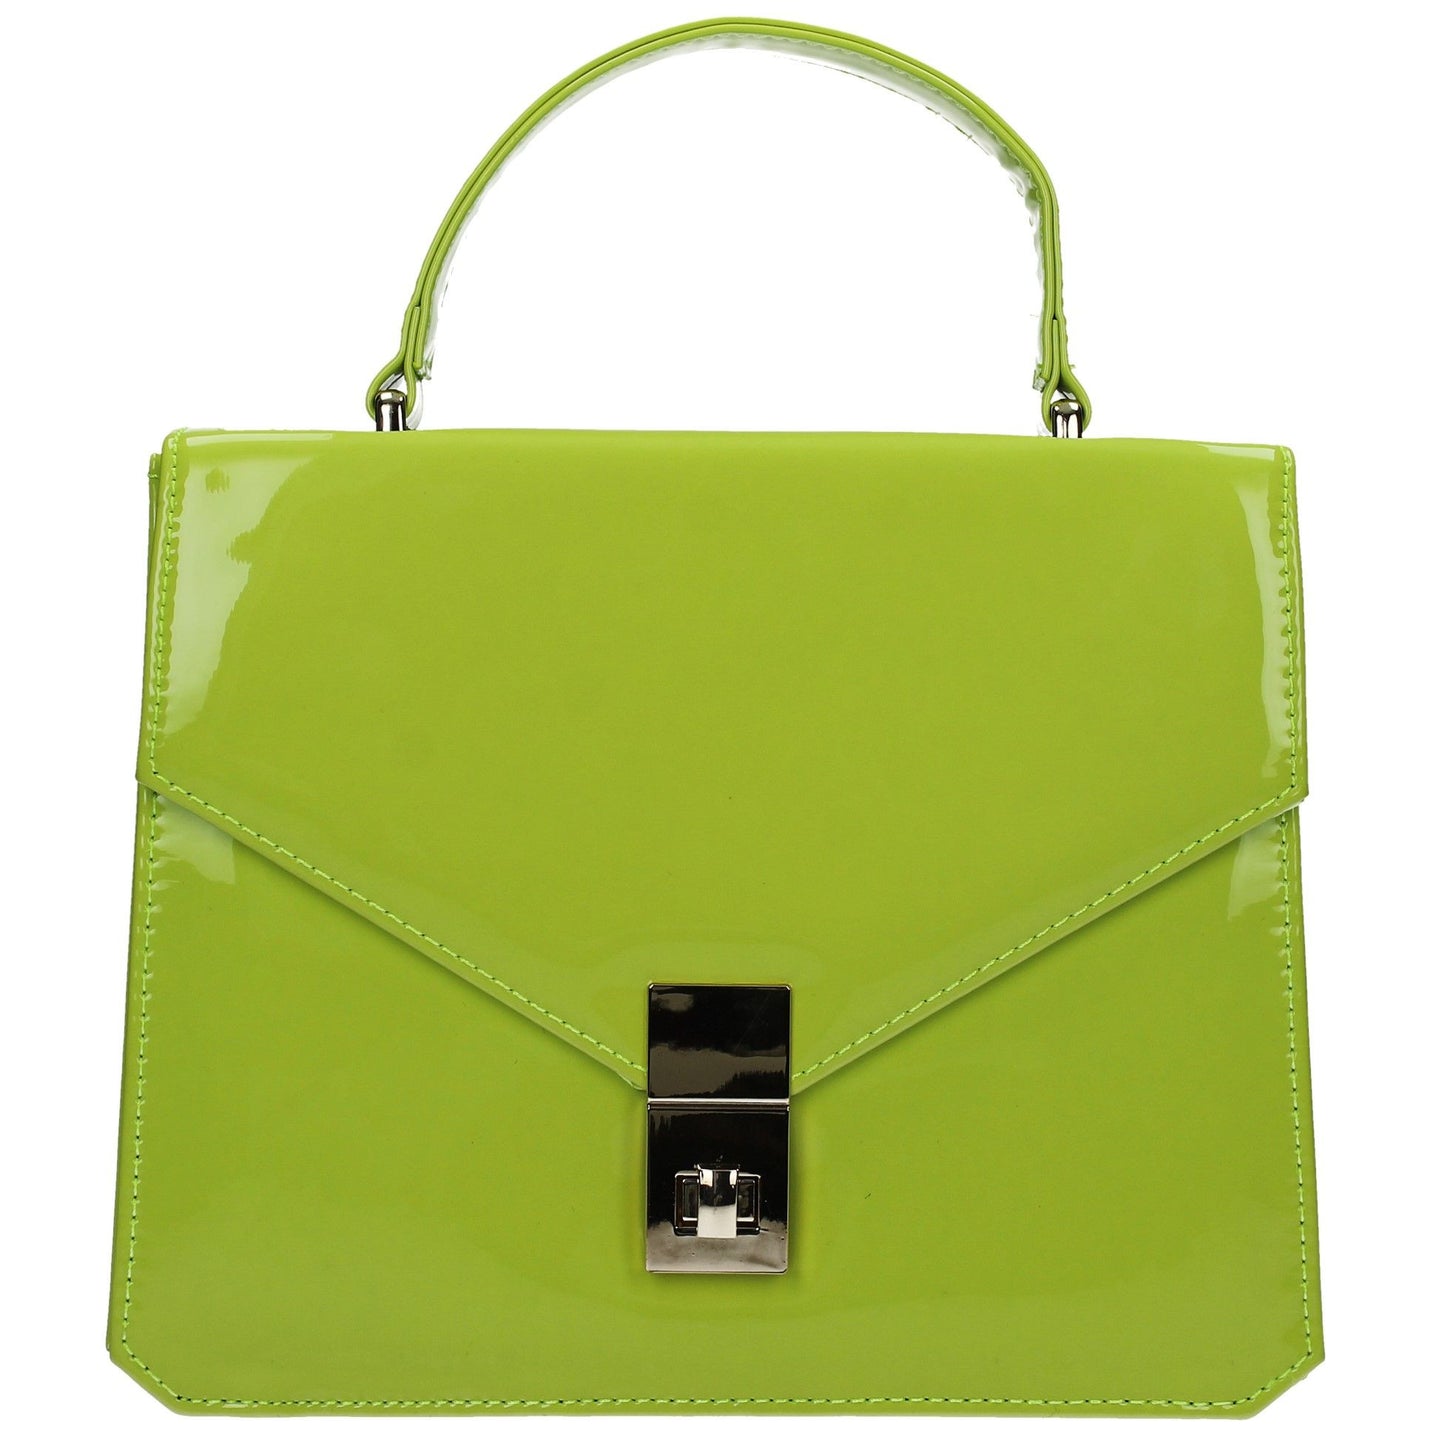 SWANKYSWANS Samantha Clutch Bag Lime Cute Cheap Clutch Bag For Weddings School and Work